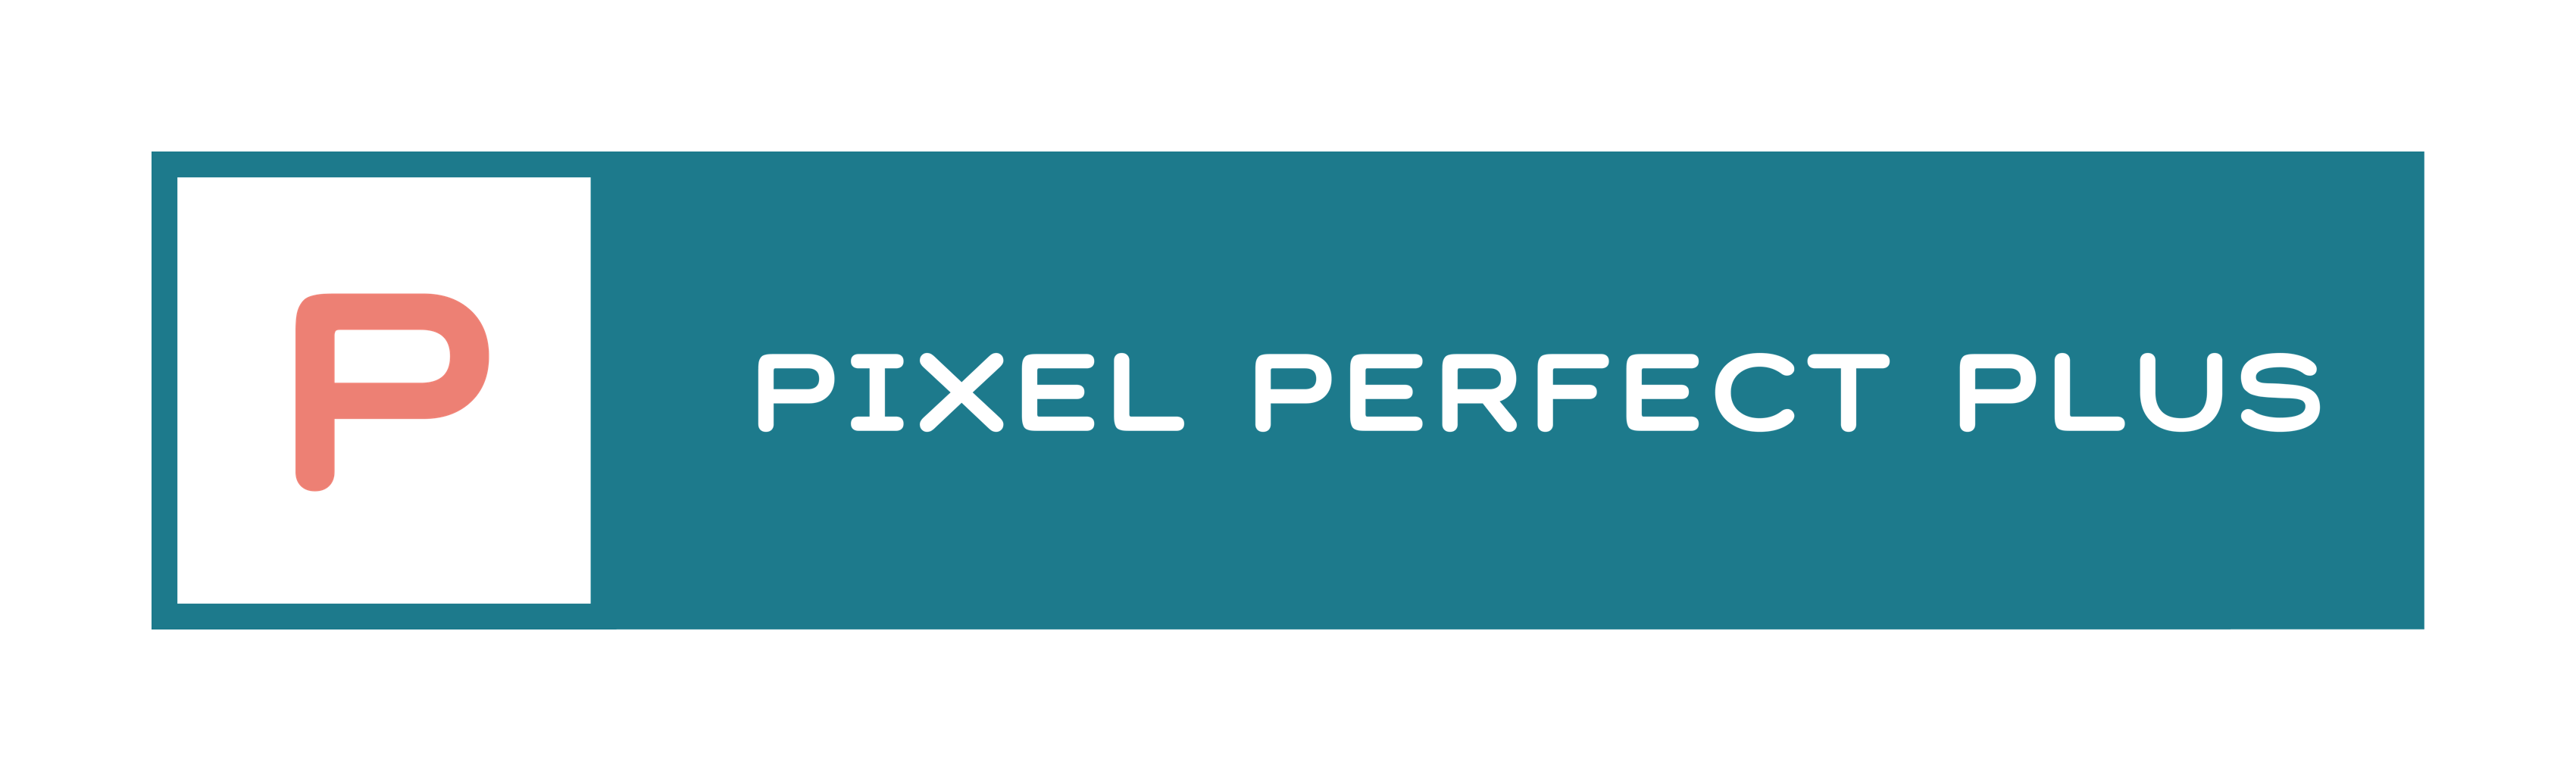 Pixel Perfect Plus logo